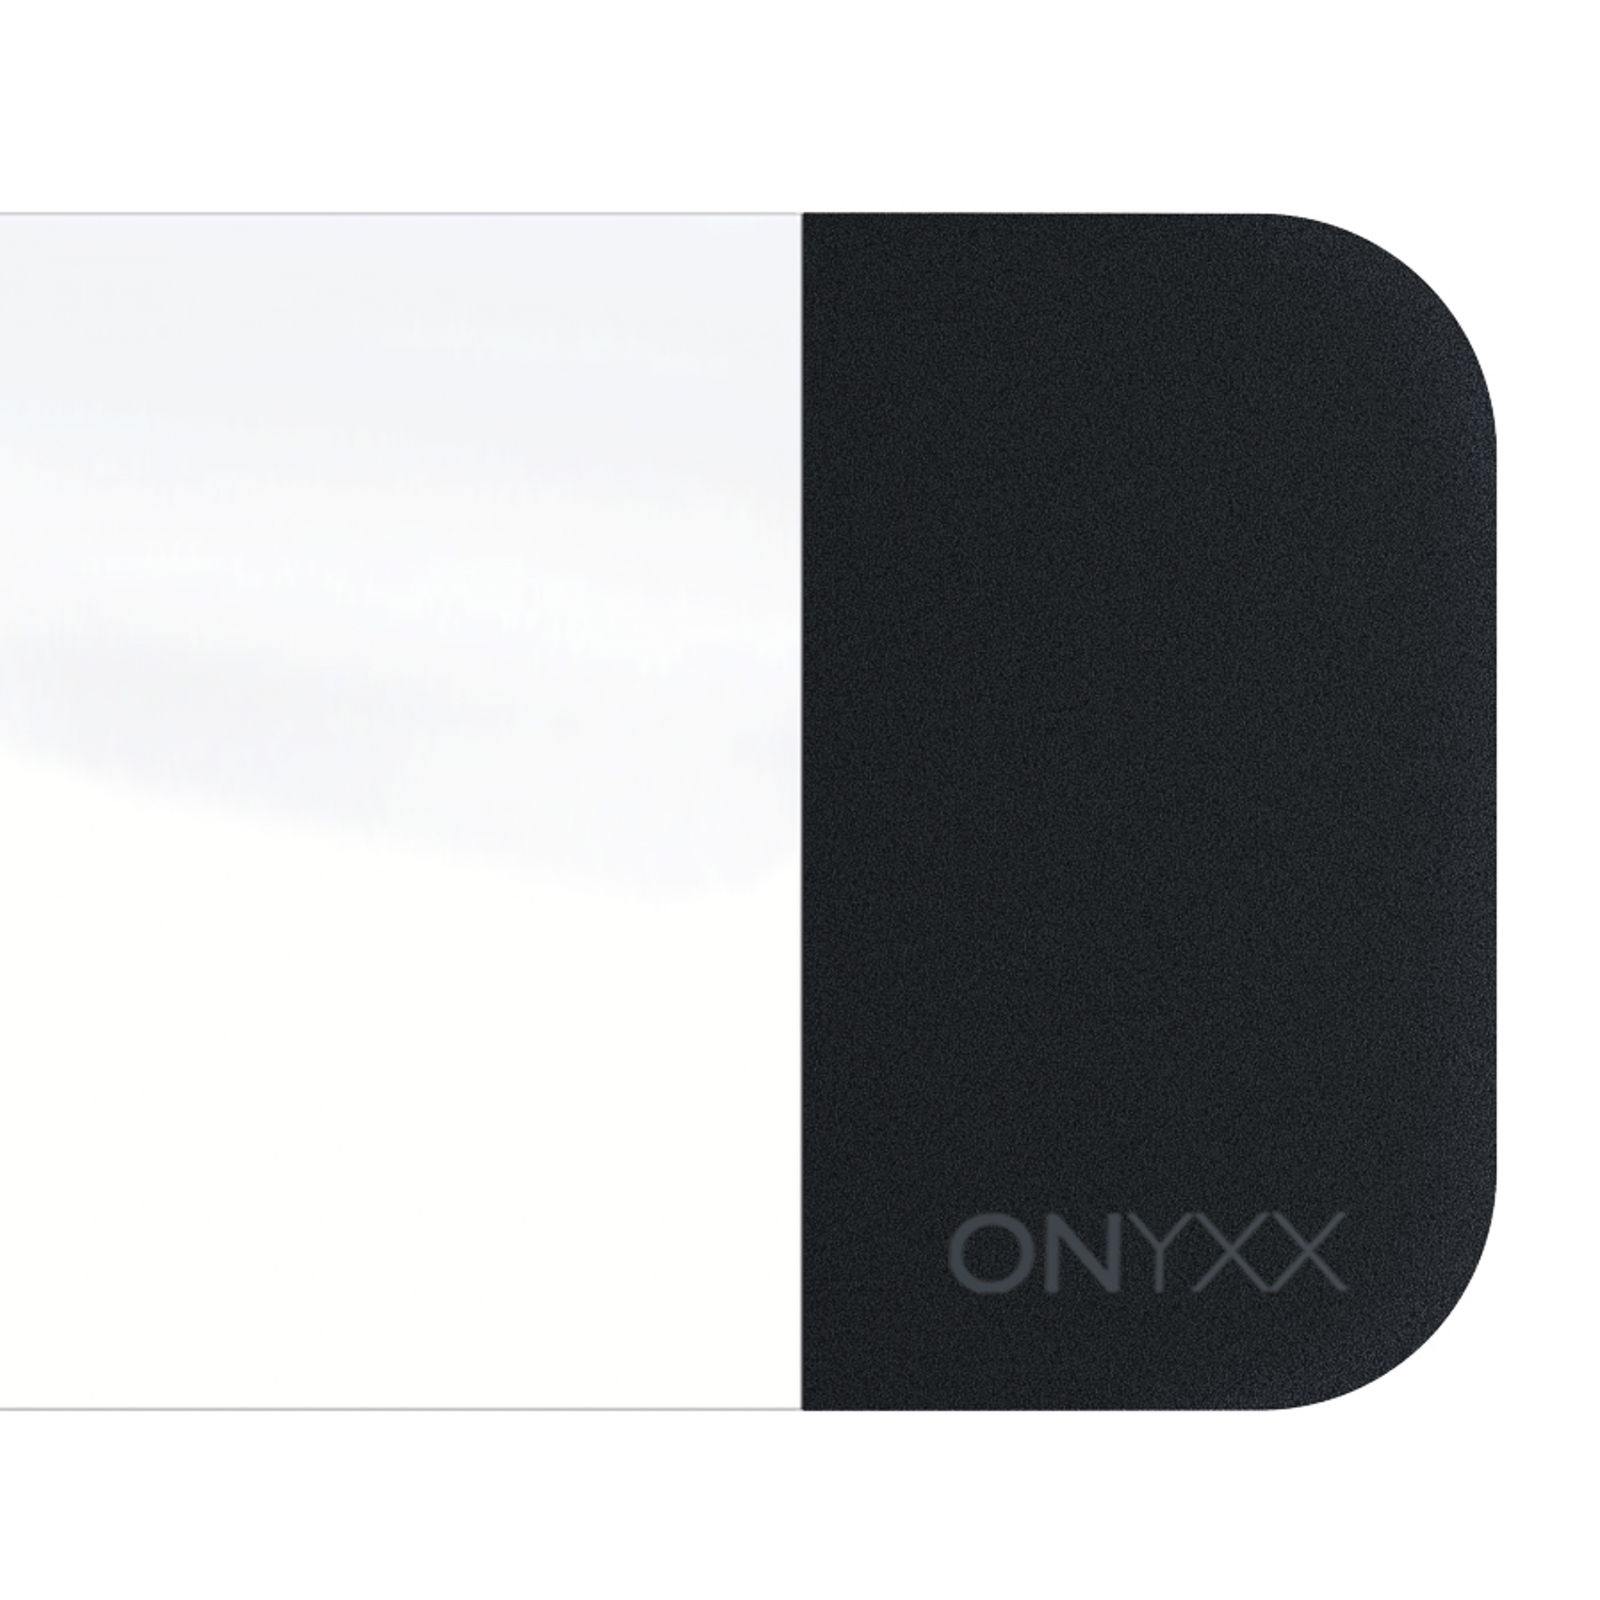 GRIMMEISEN Onyxx Linea Pro-riippuvalo valk./musta